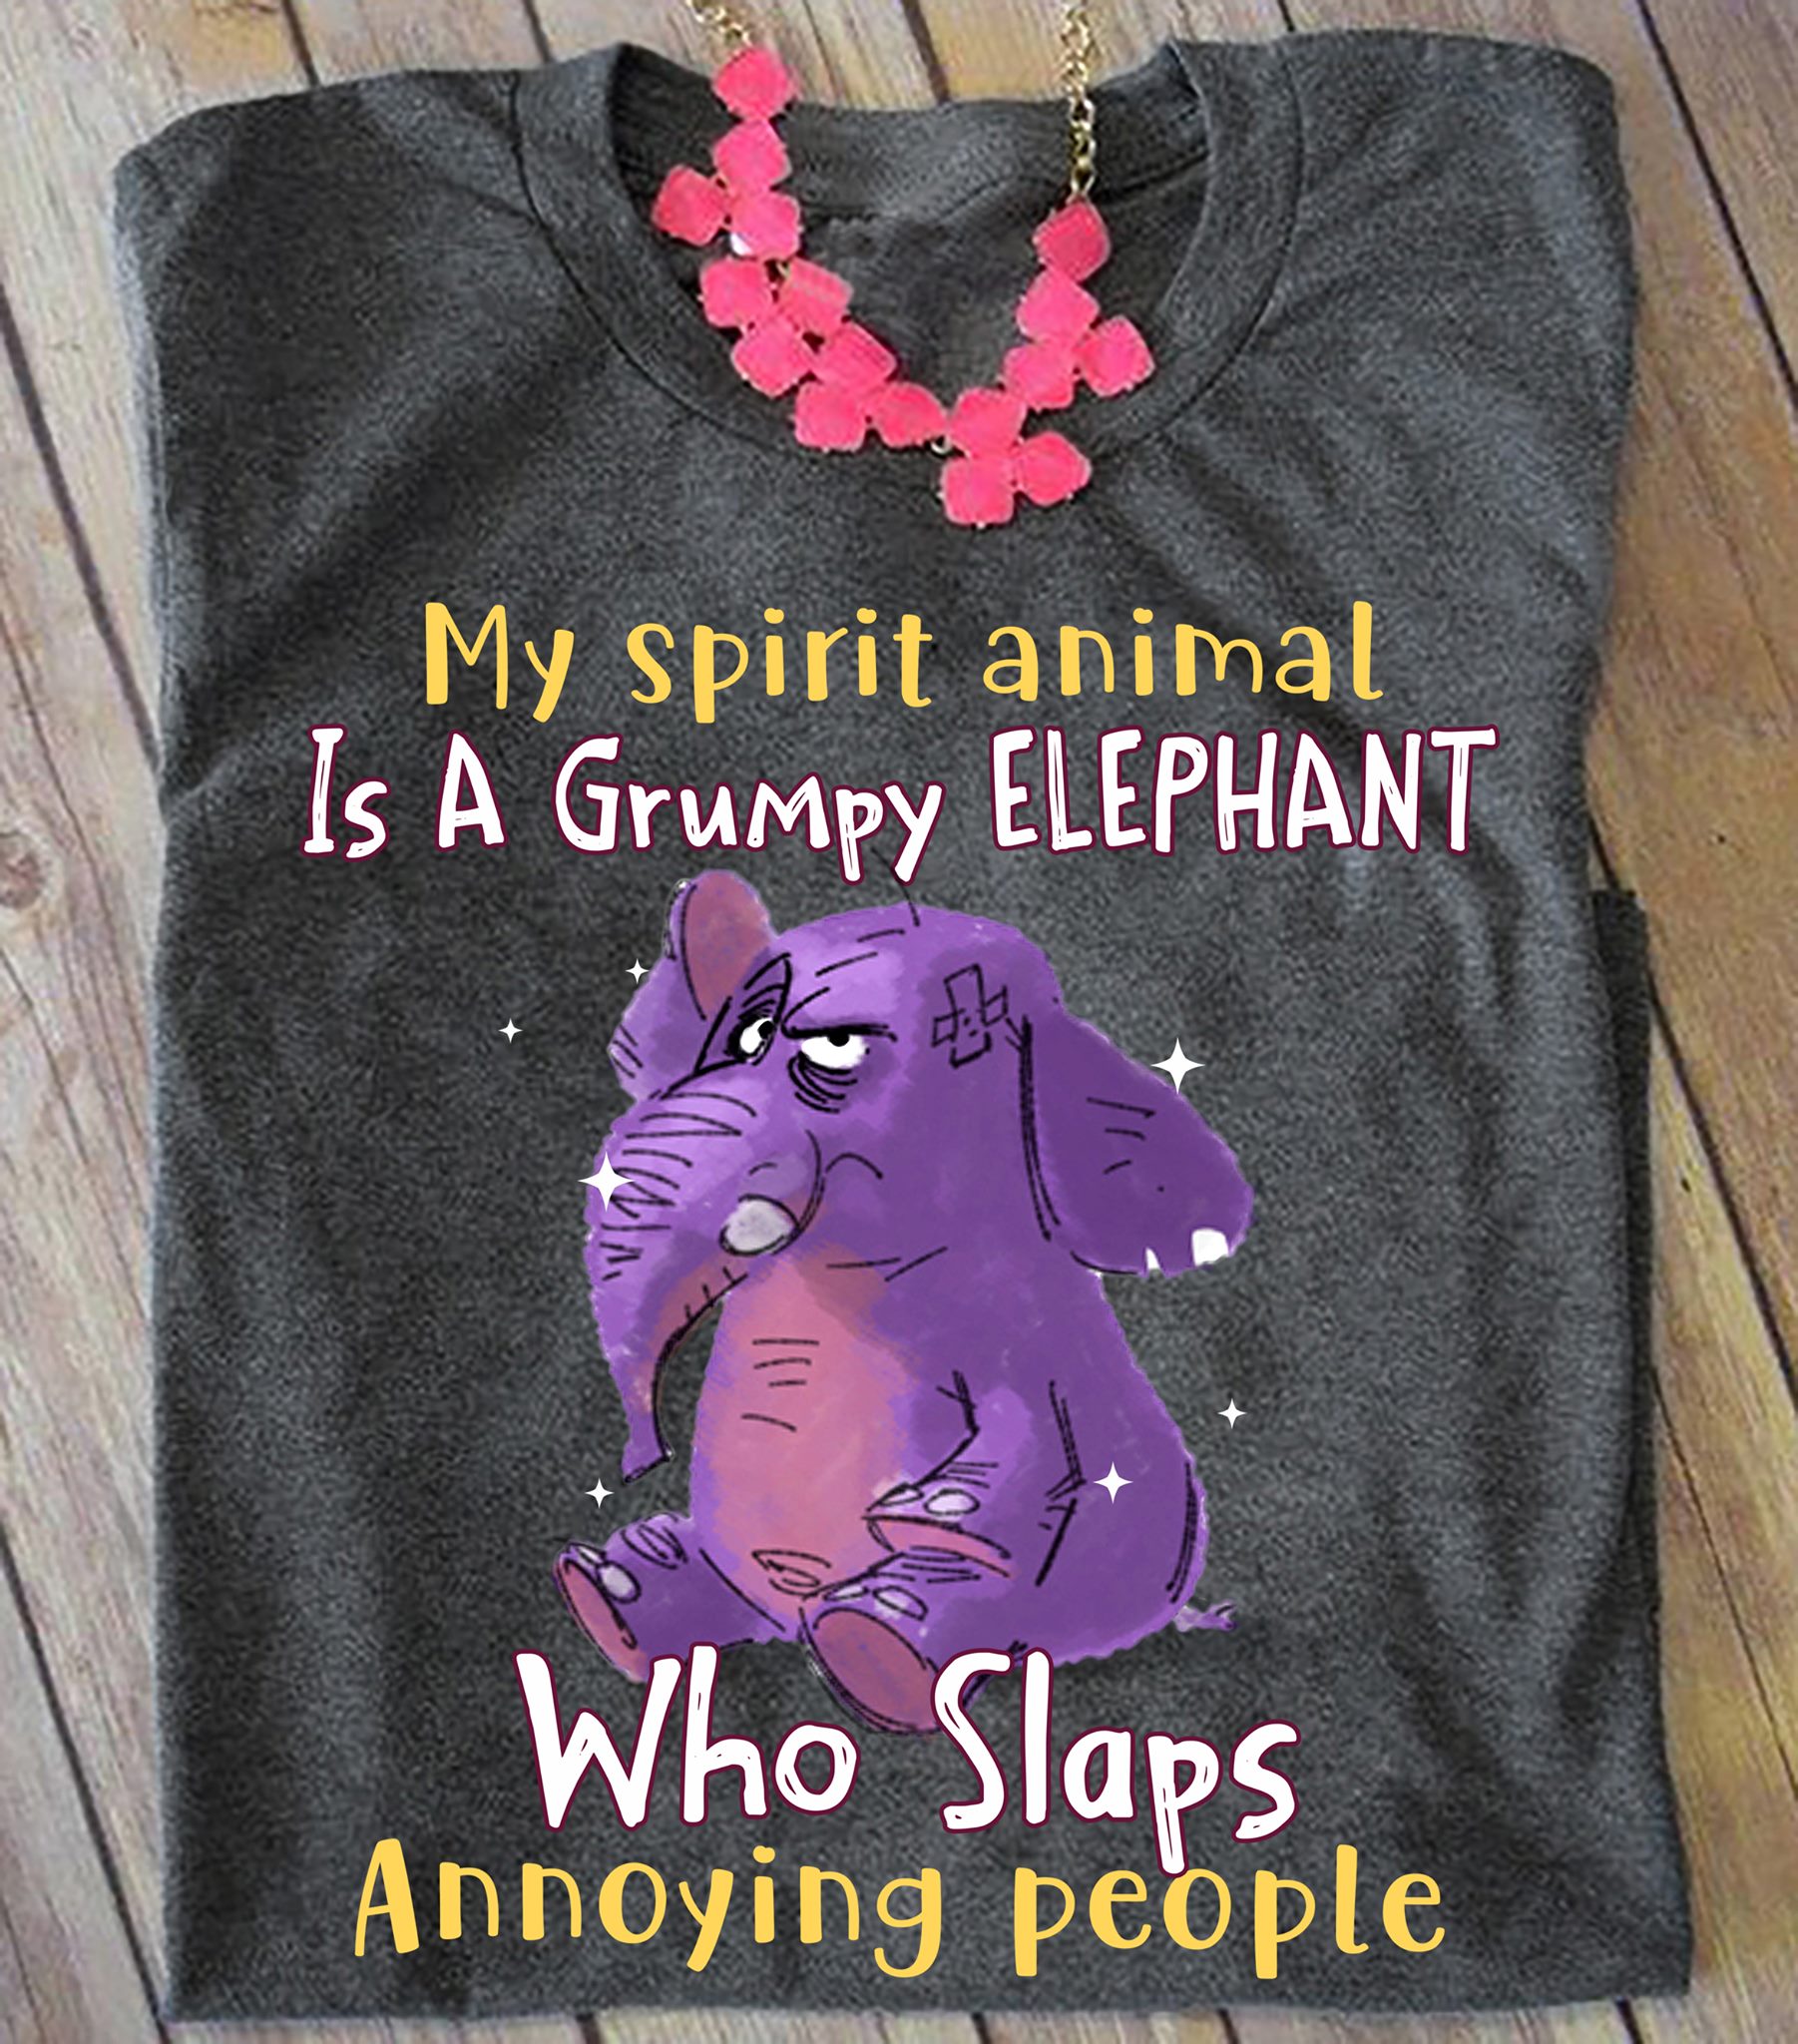 My spirit animal is a grumpy elephant who slaps annoying people